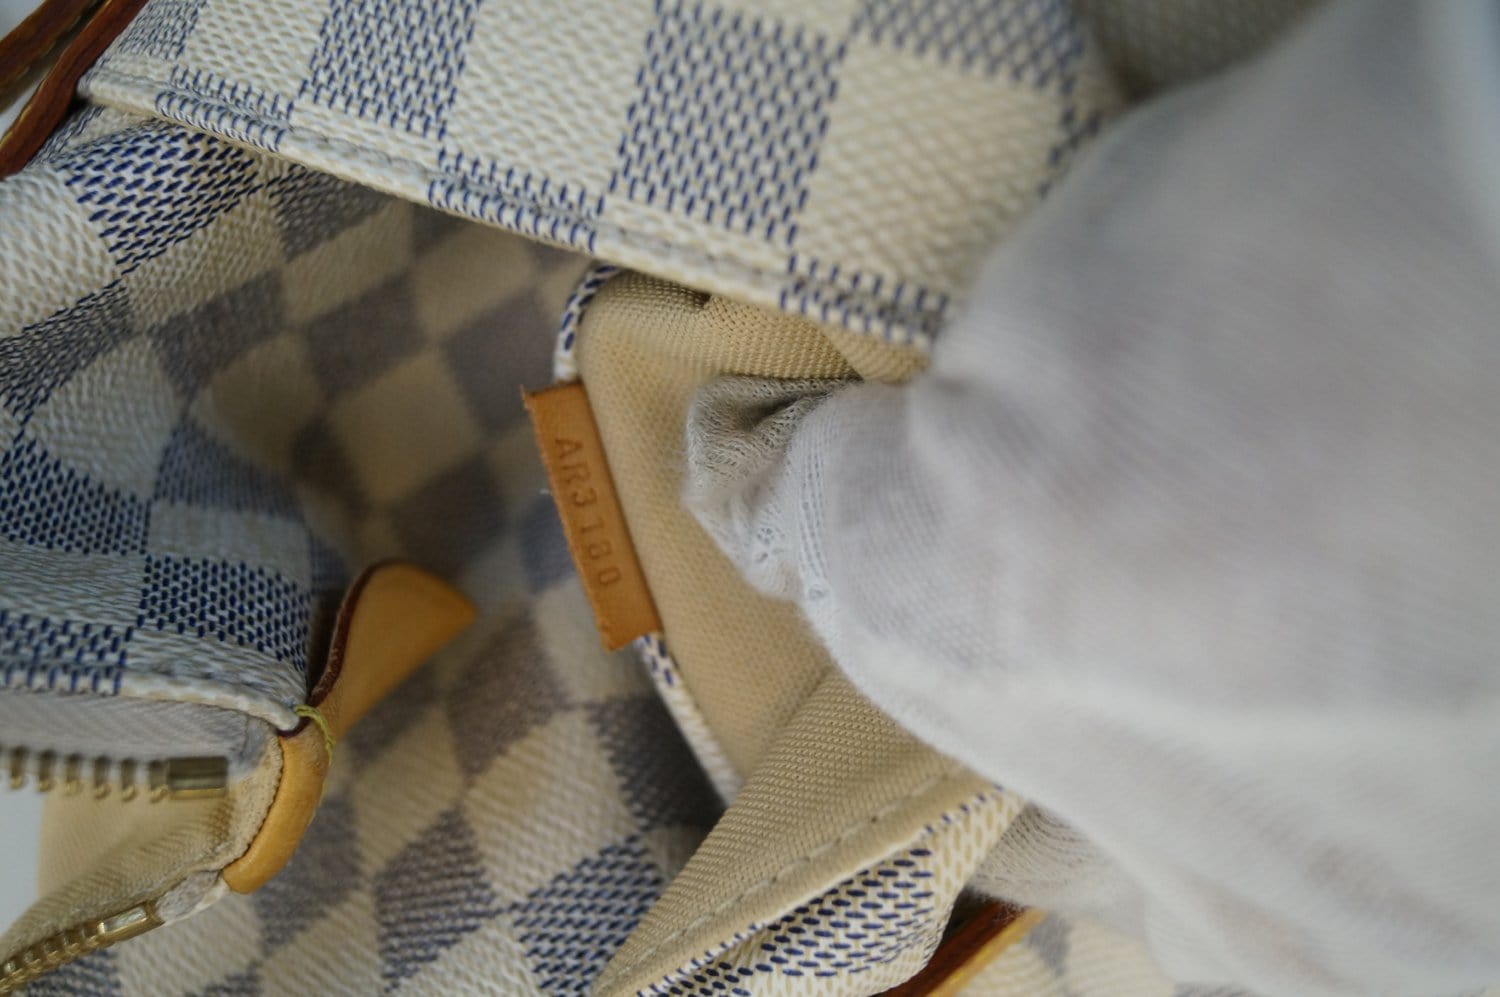 Louis Vuitton Damier Azur Totally PM Tote Bag 83lk67s